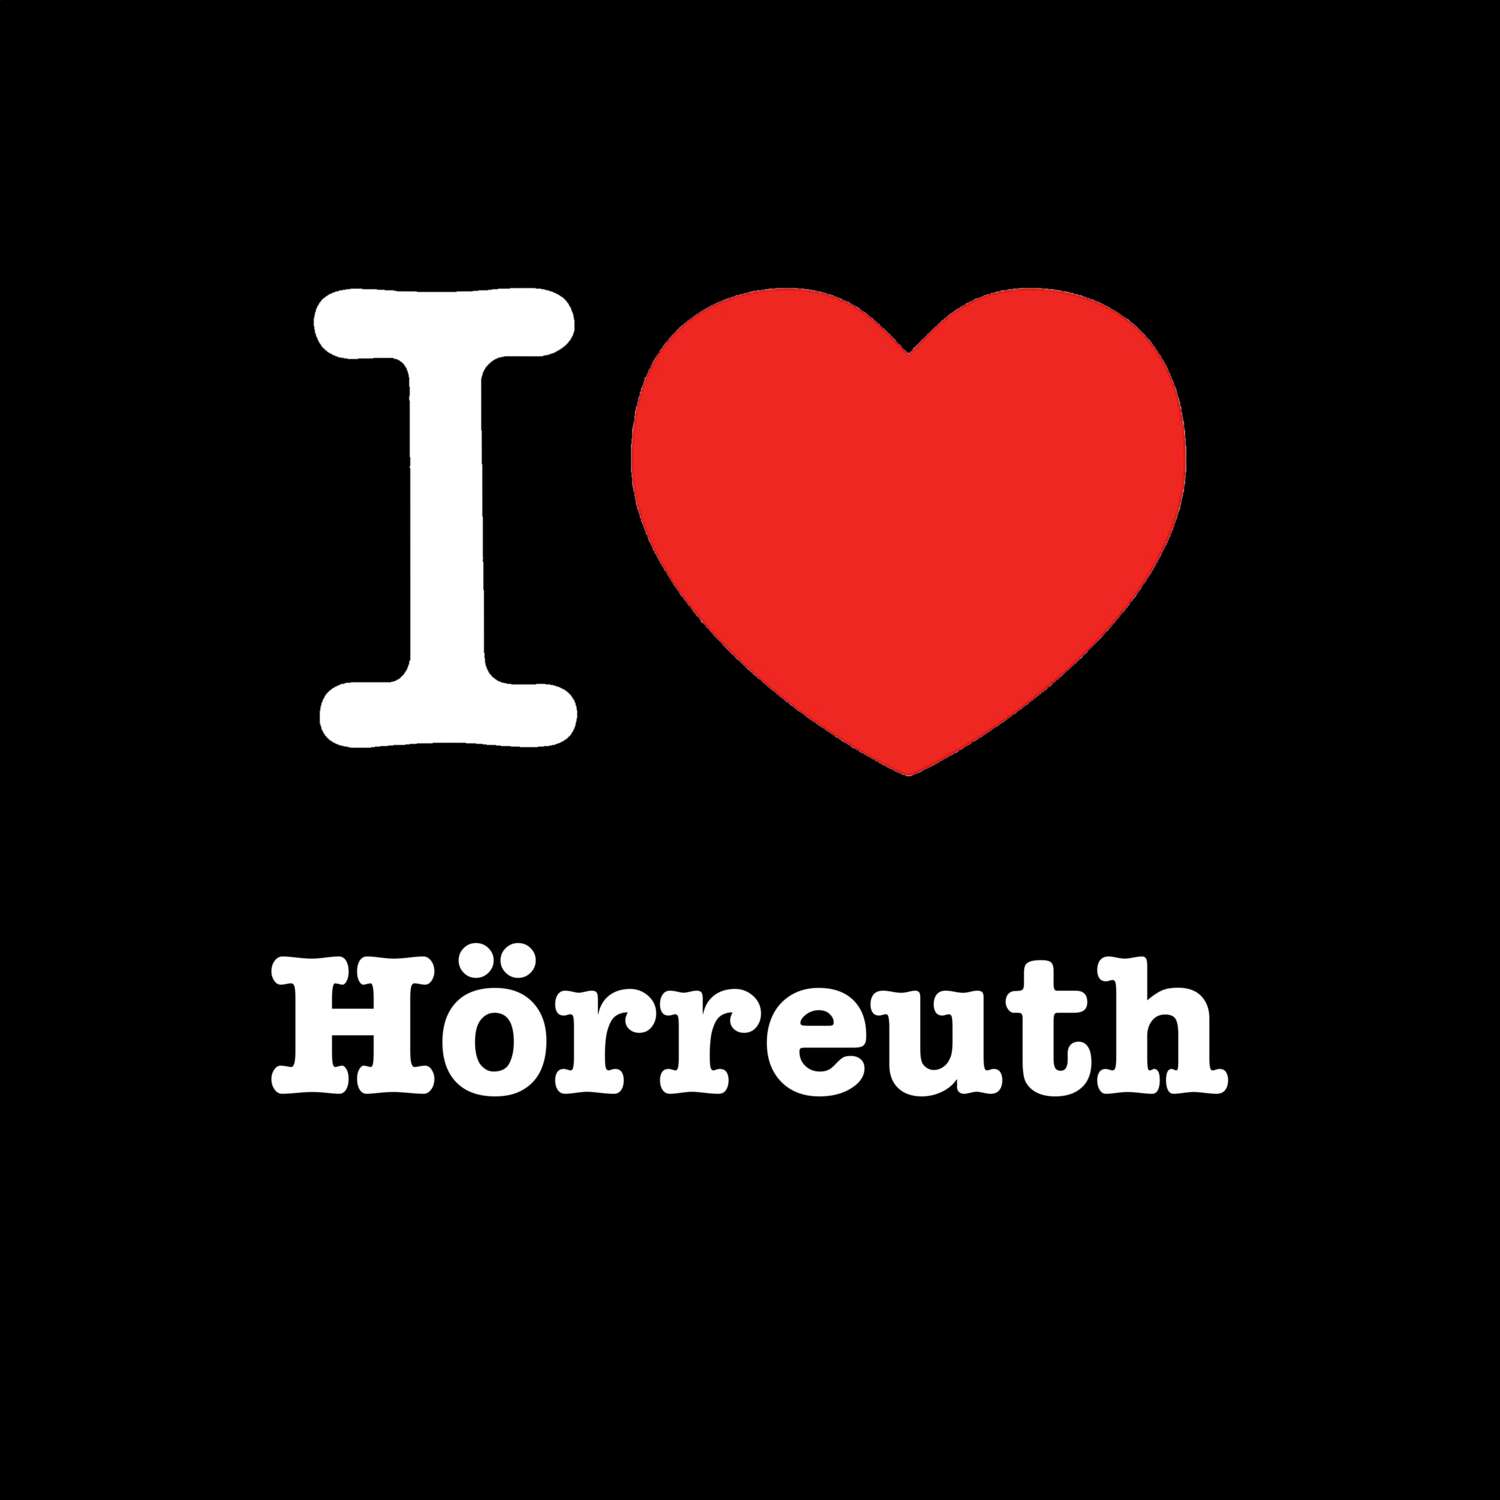 Hörreuth T-Shirt »I love«